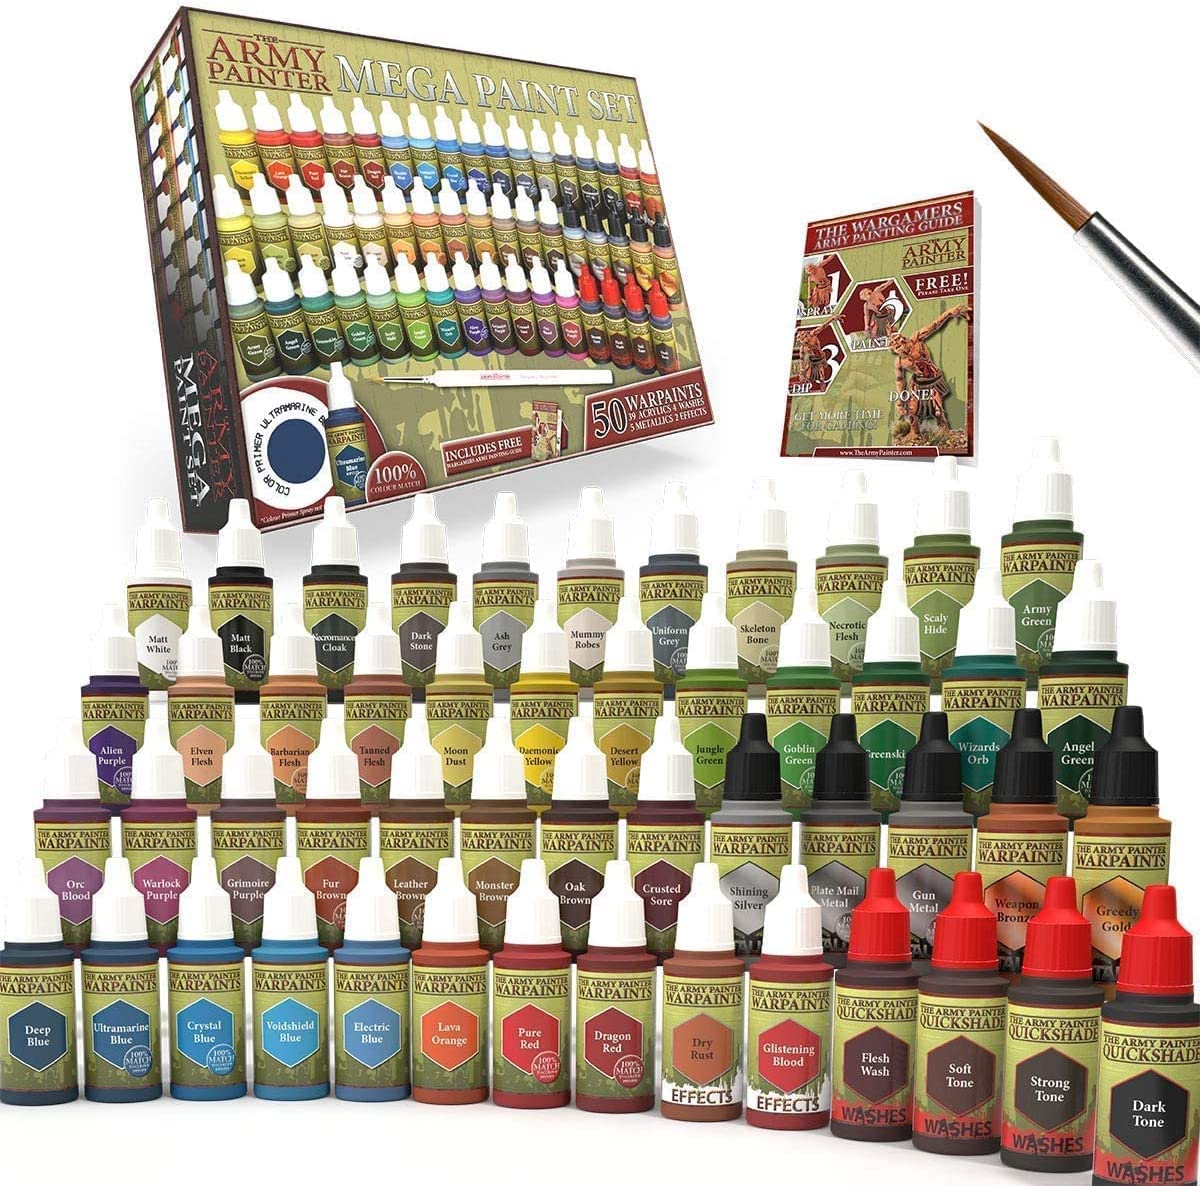 The Army Painter Miniature Painting Kit with Wargamer Regiment Miniatu –  Hobbies Shop